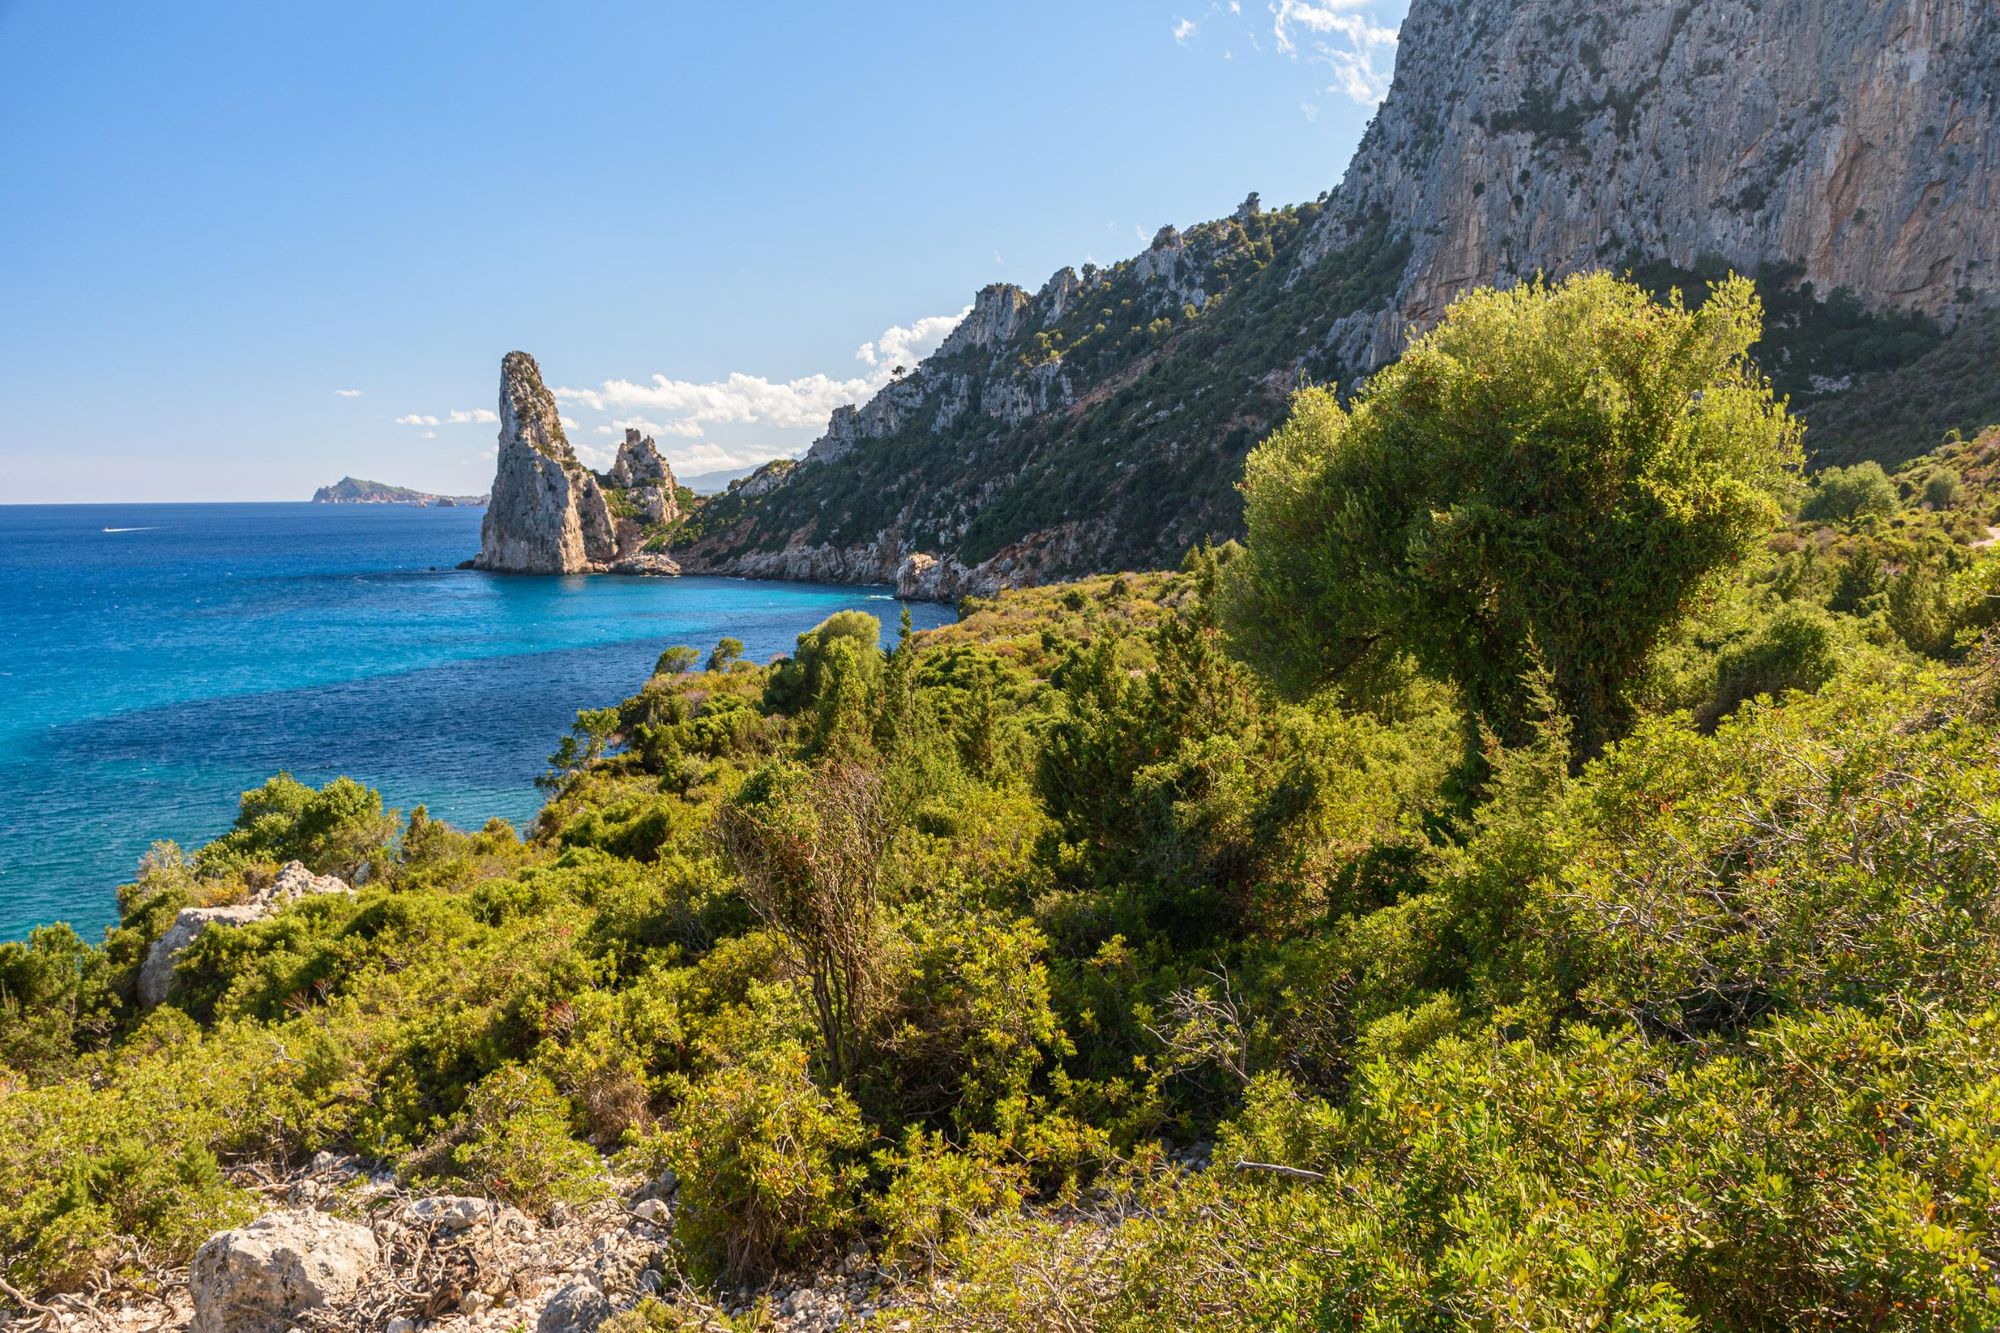 The coastline of Sardinia, home to the Selvaggio Blu trekking route. Photo: Getty